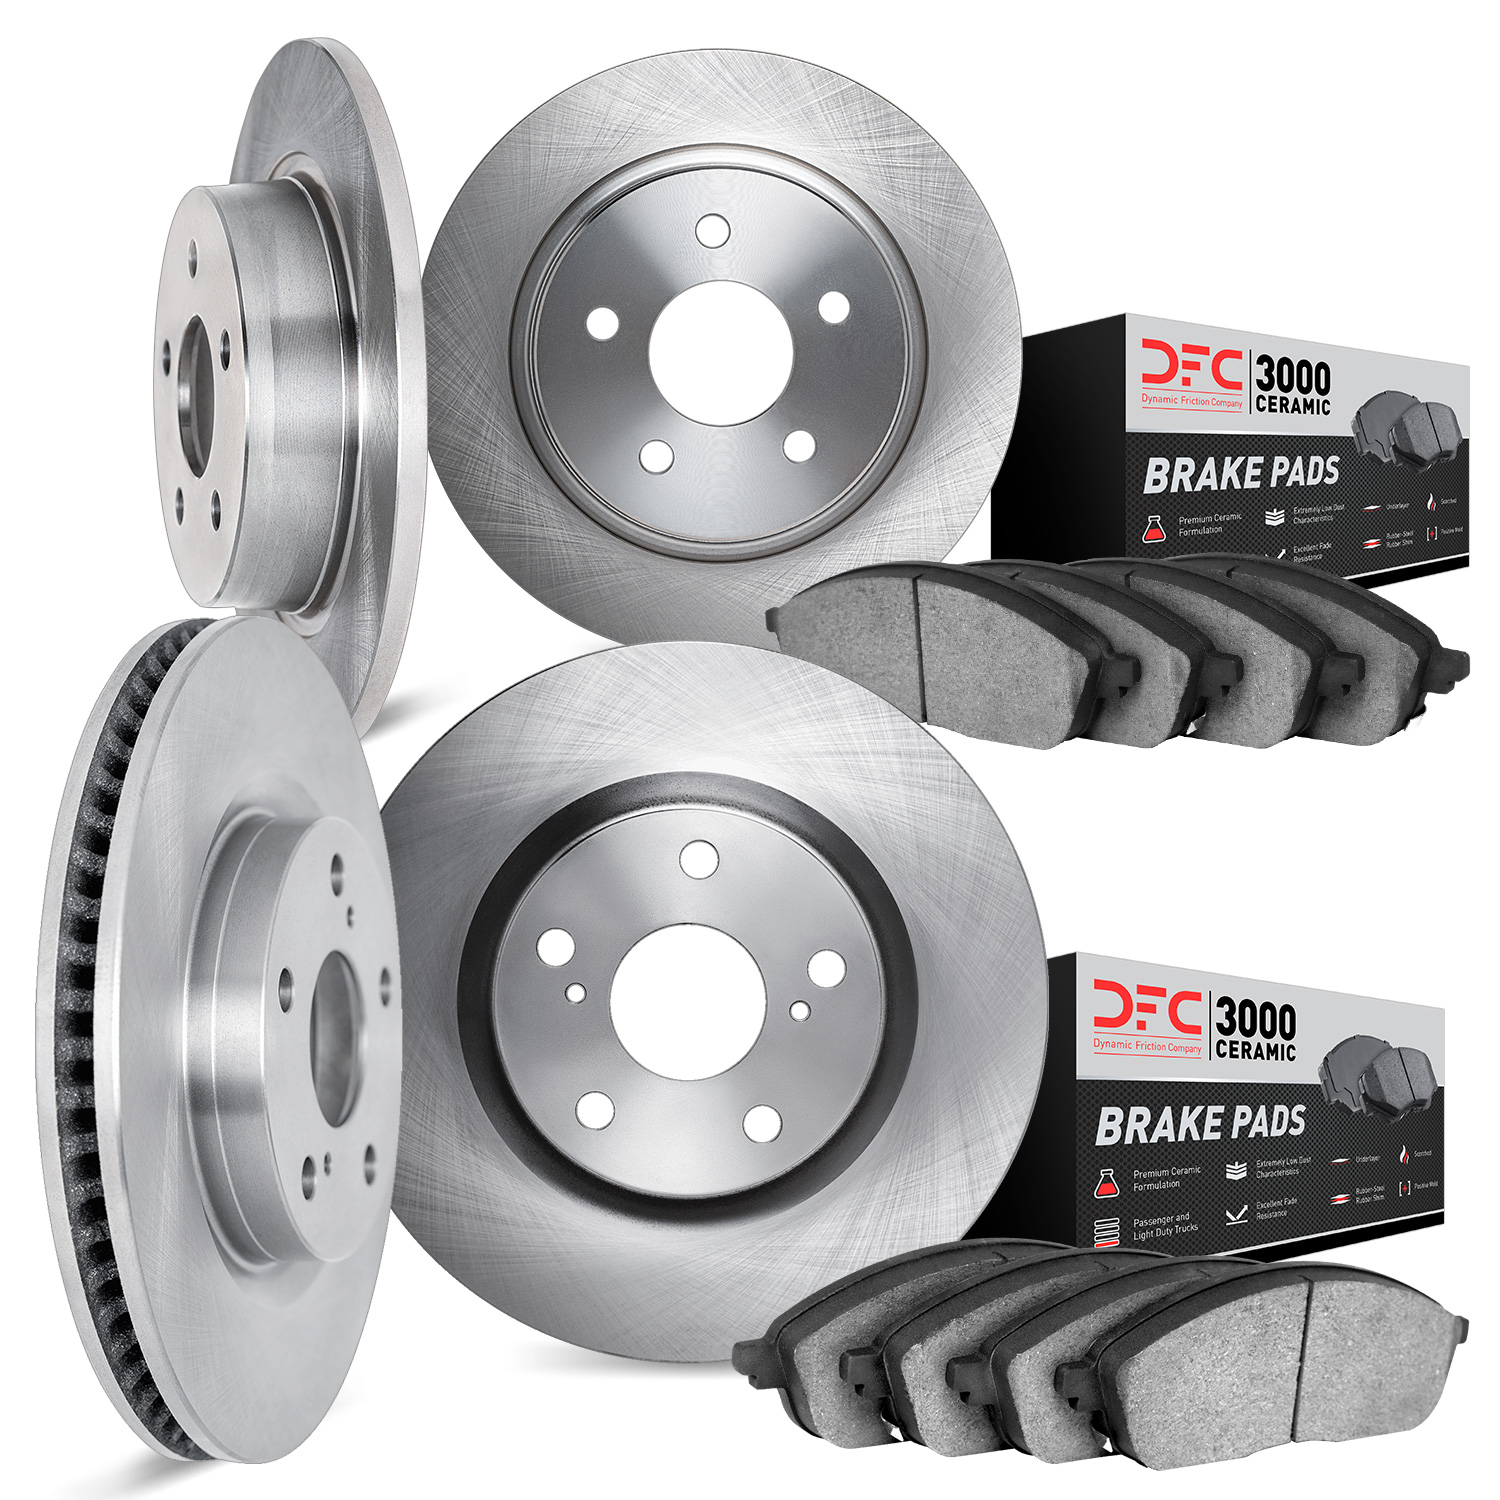 6304-13048 Brake Rotors with 3000-Series Ceramic Brake Pads Kit, Fits Select Subaru, Position: Front and Rear